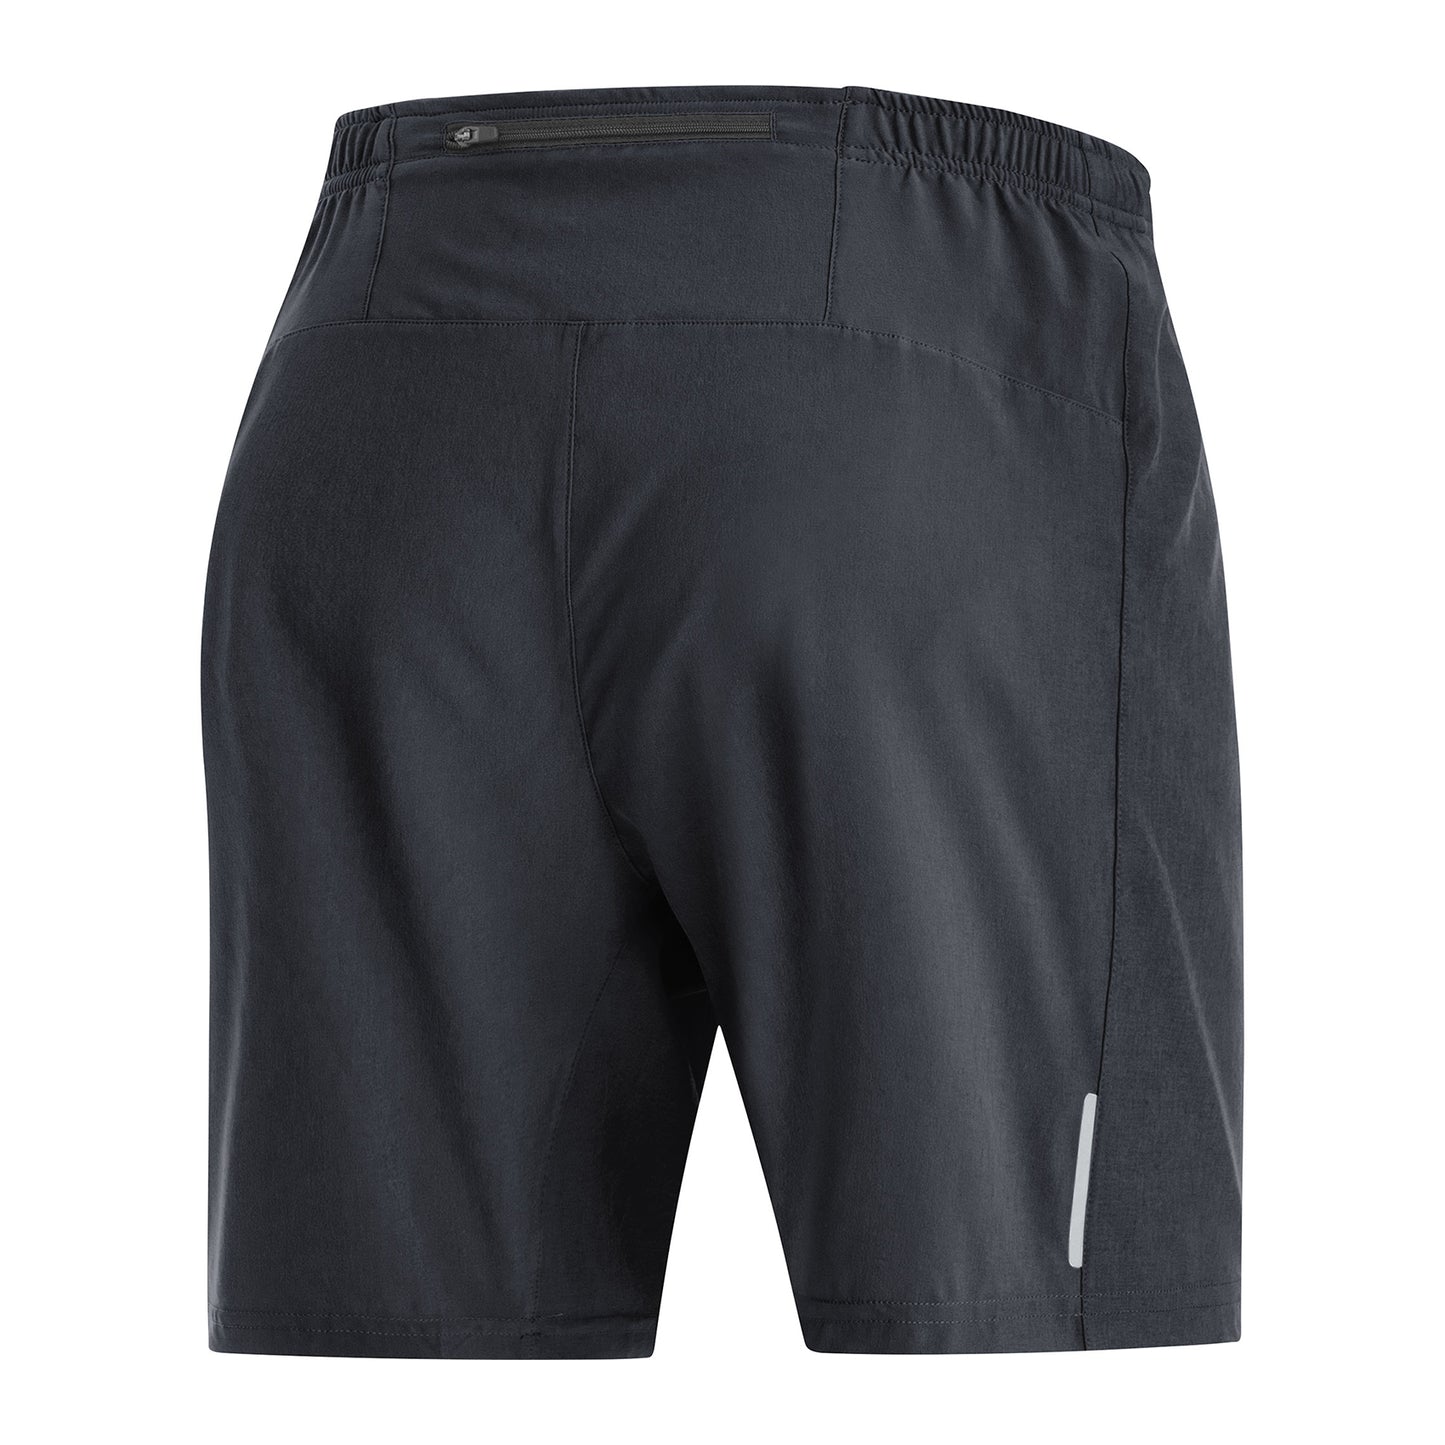 Men's R5 5 Inch Shorts - Black